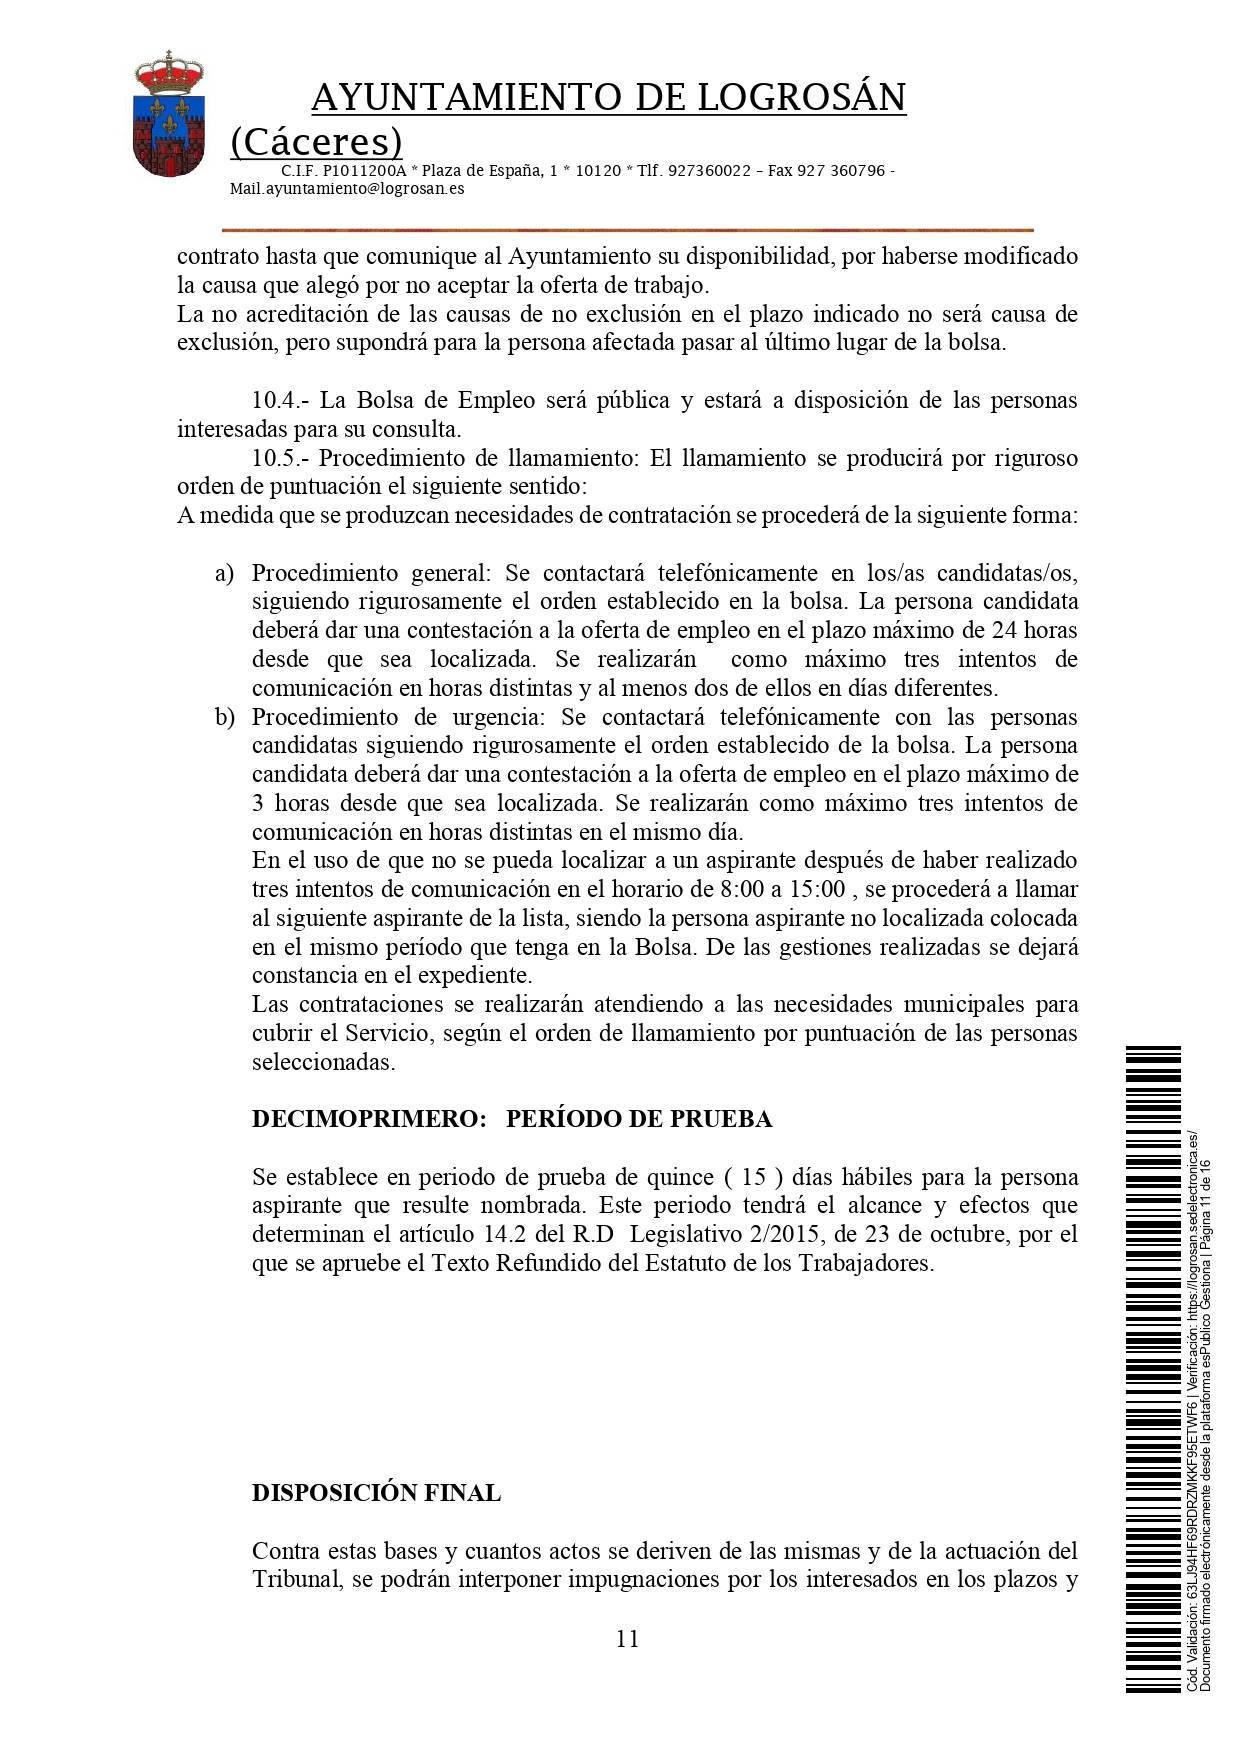 Técnicos-as auxiliar de biblioteca y dinamizador-a cultural (2021) - Logrosán (Cáceres) 11